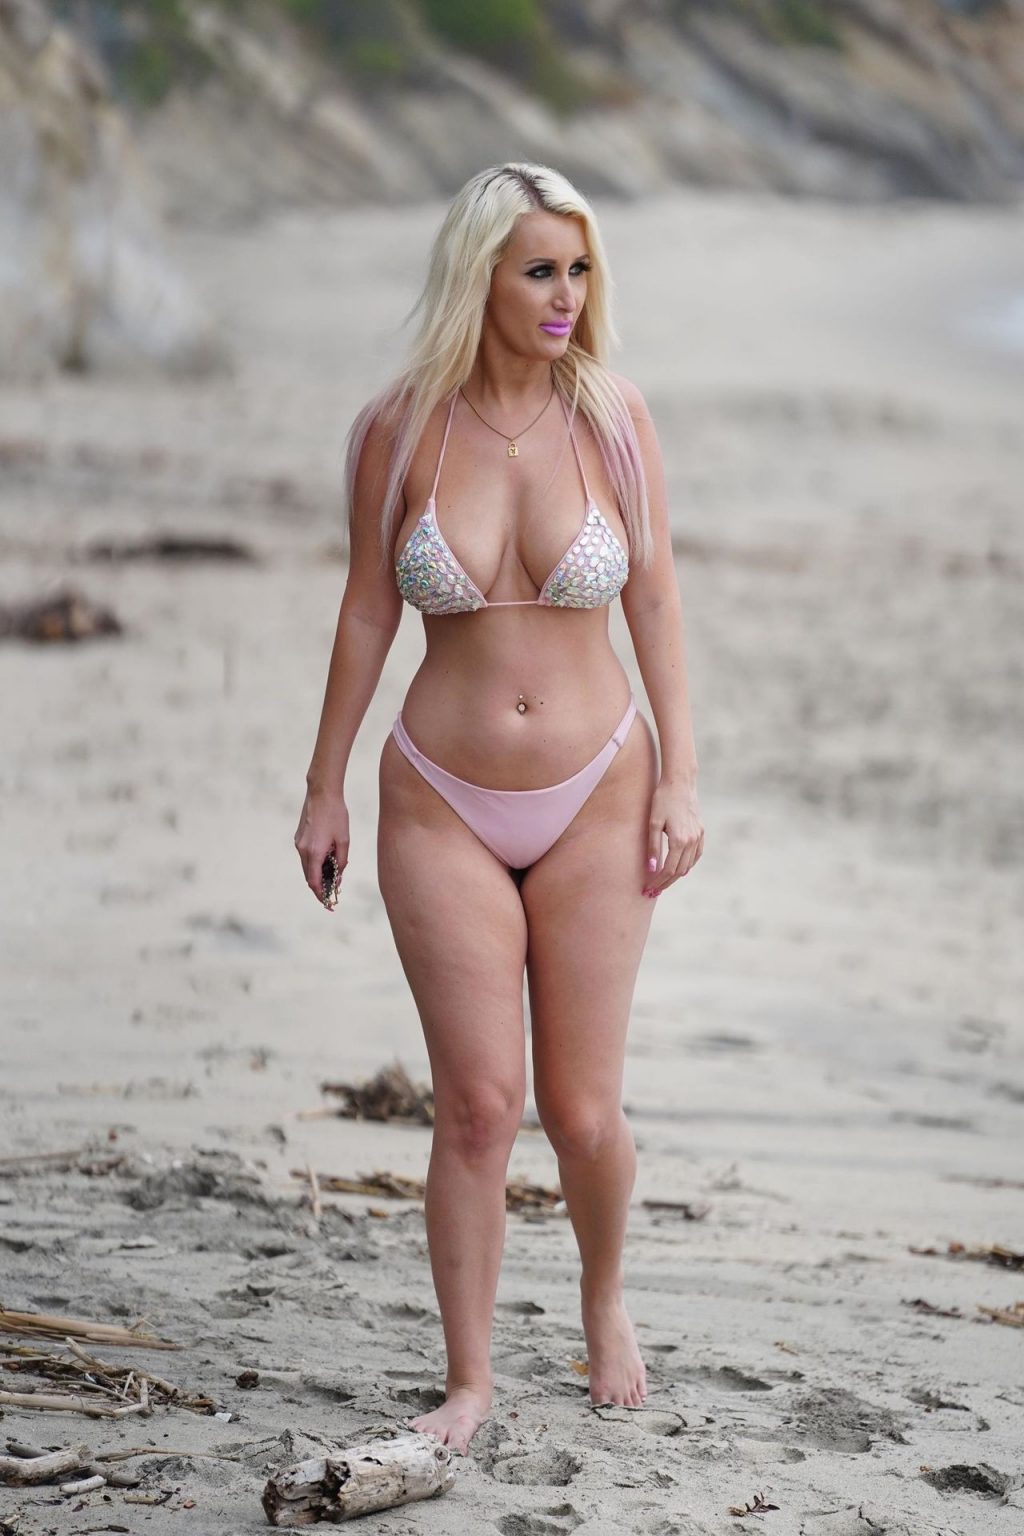 Tiffany Madison Poses in a Bikini on the Beach in Malibu (51 Photos)